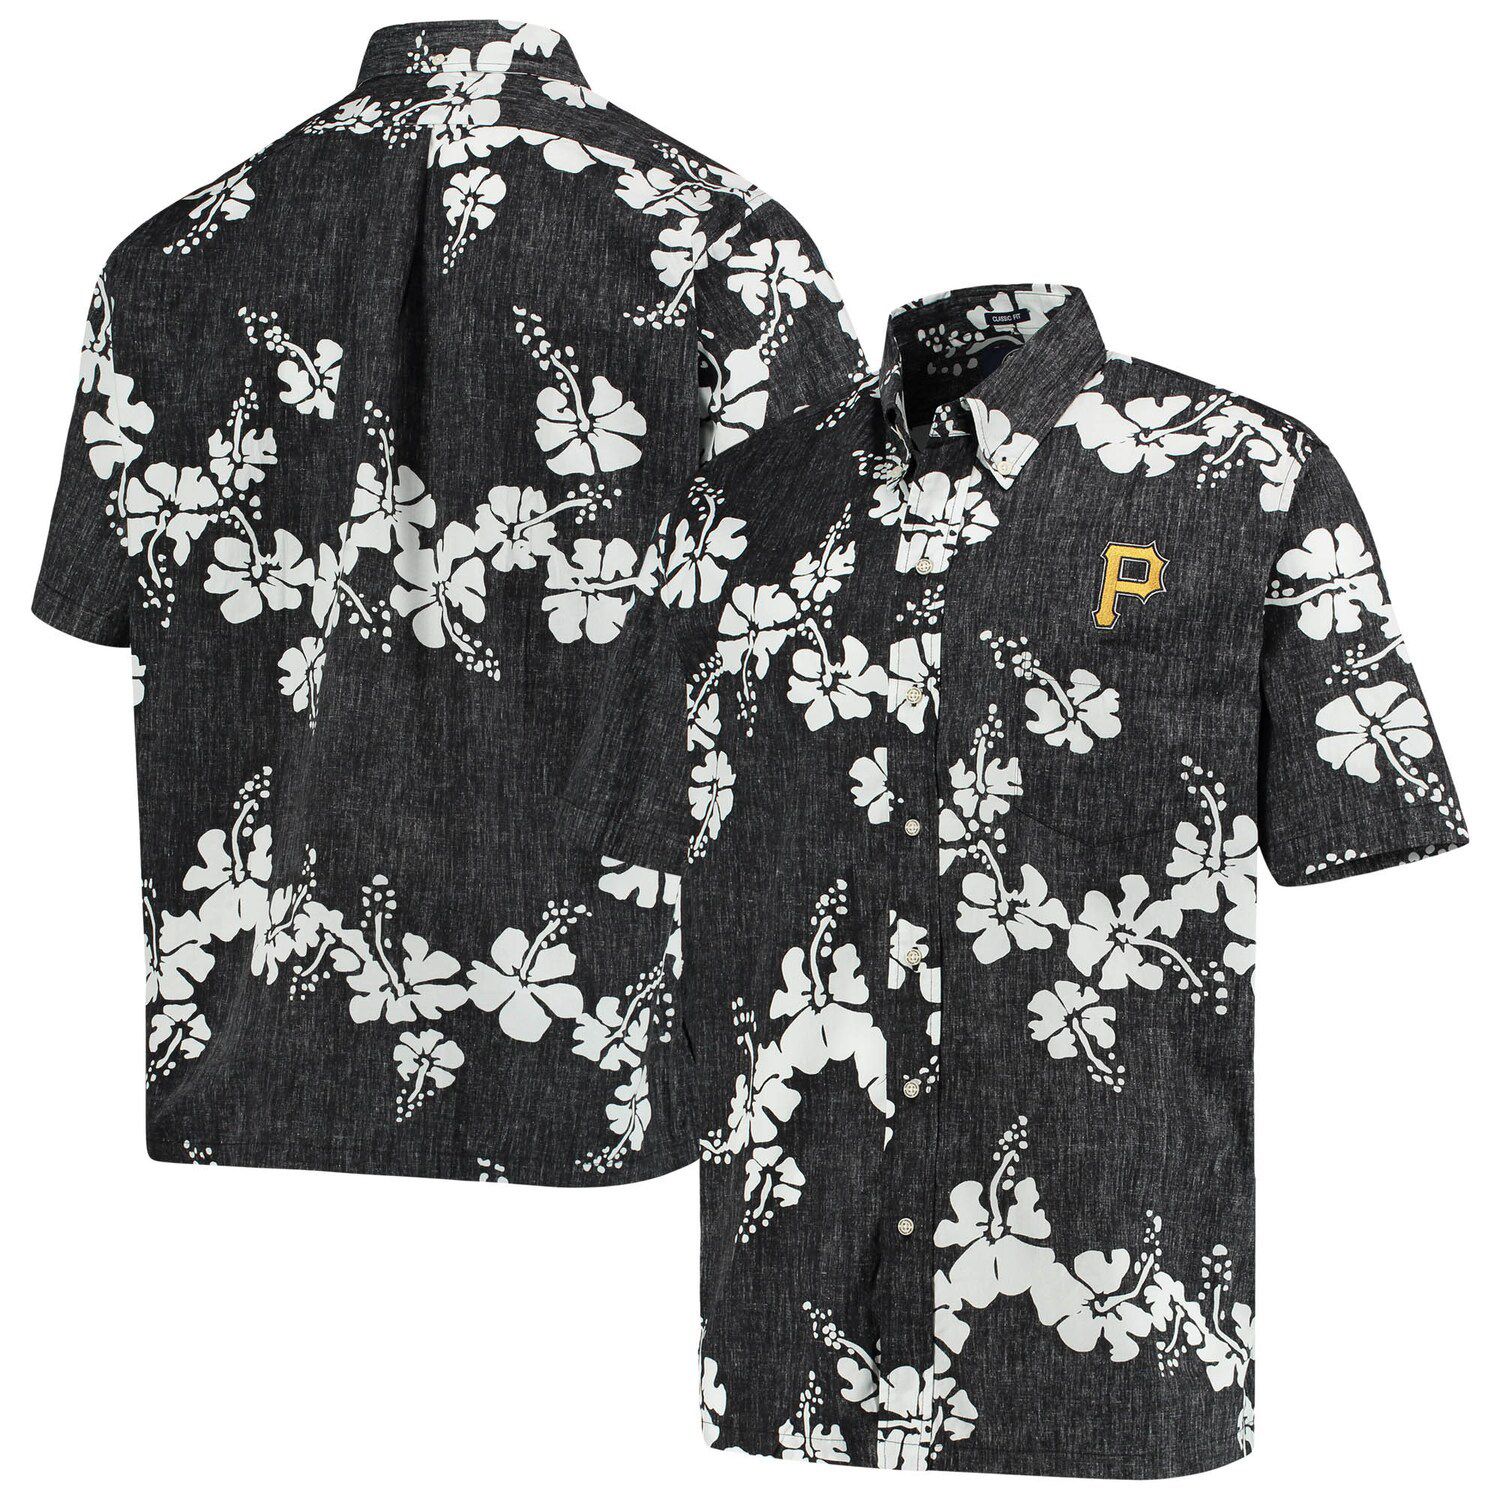 pittsburgh pirates button down shirt